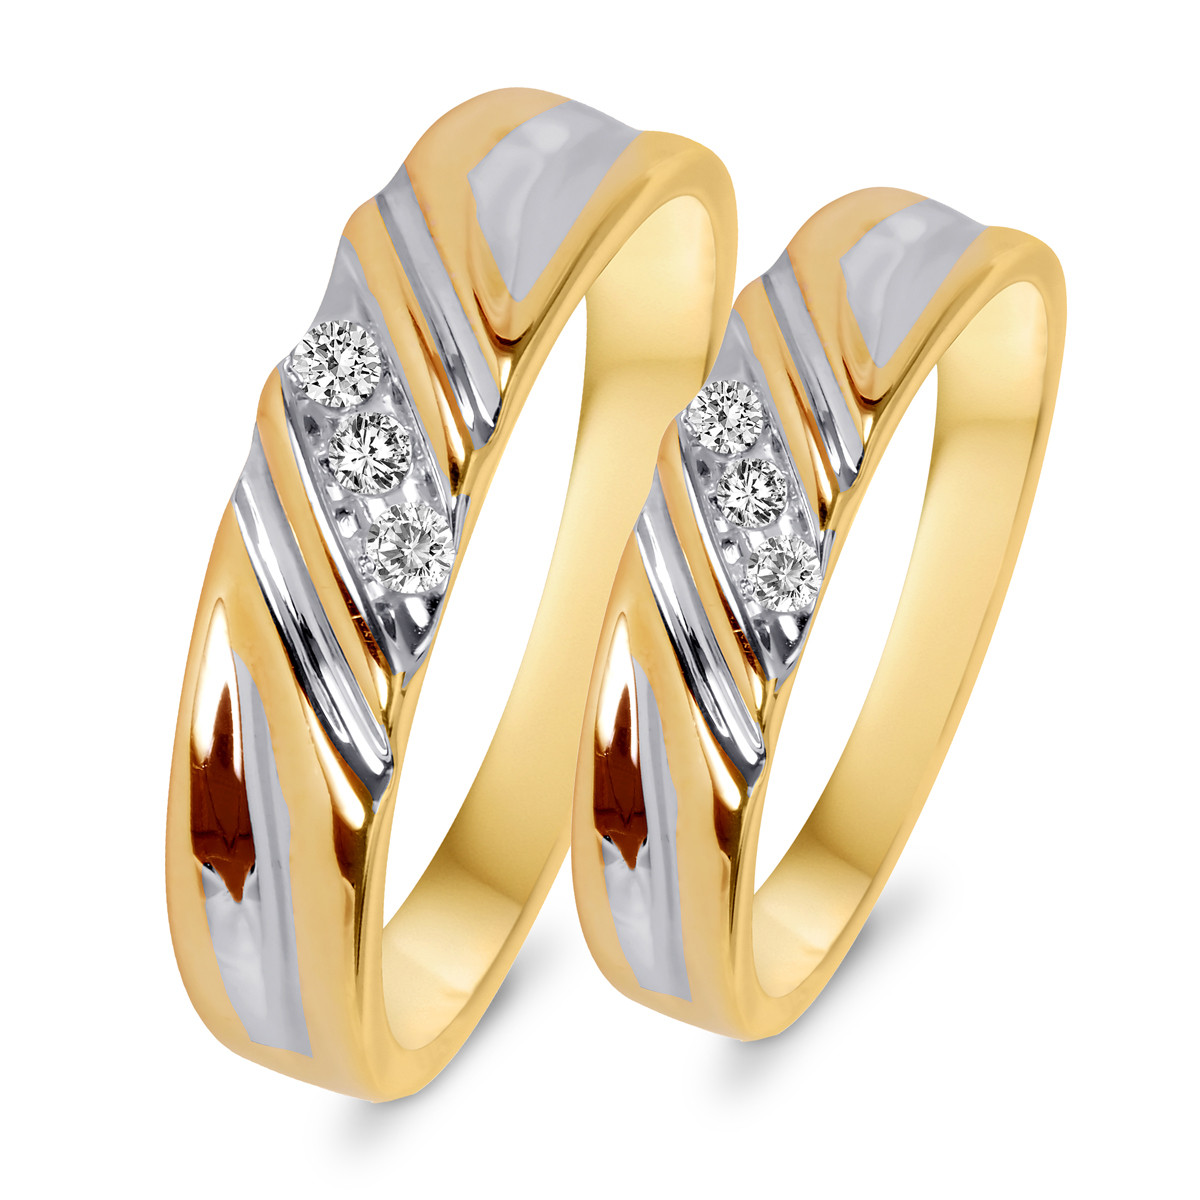 Www Wedding Rings
 1 10 CT T W Diamond His And Hers Wedding Rings 10K